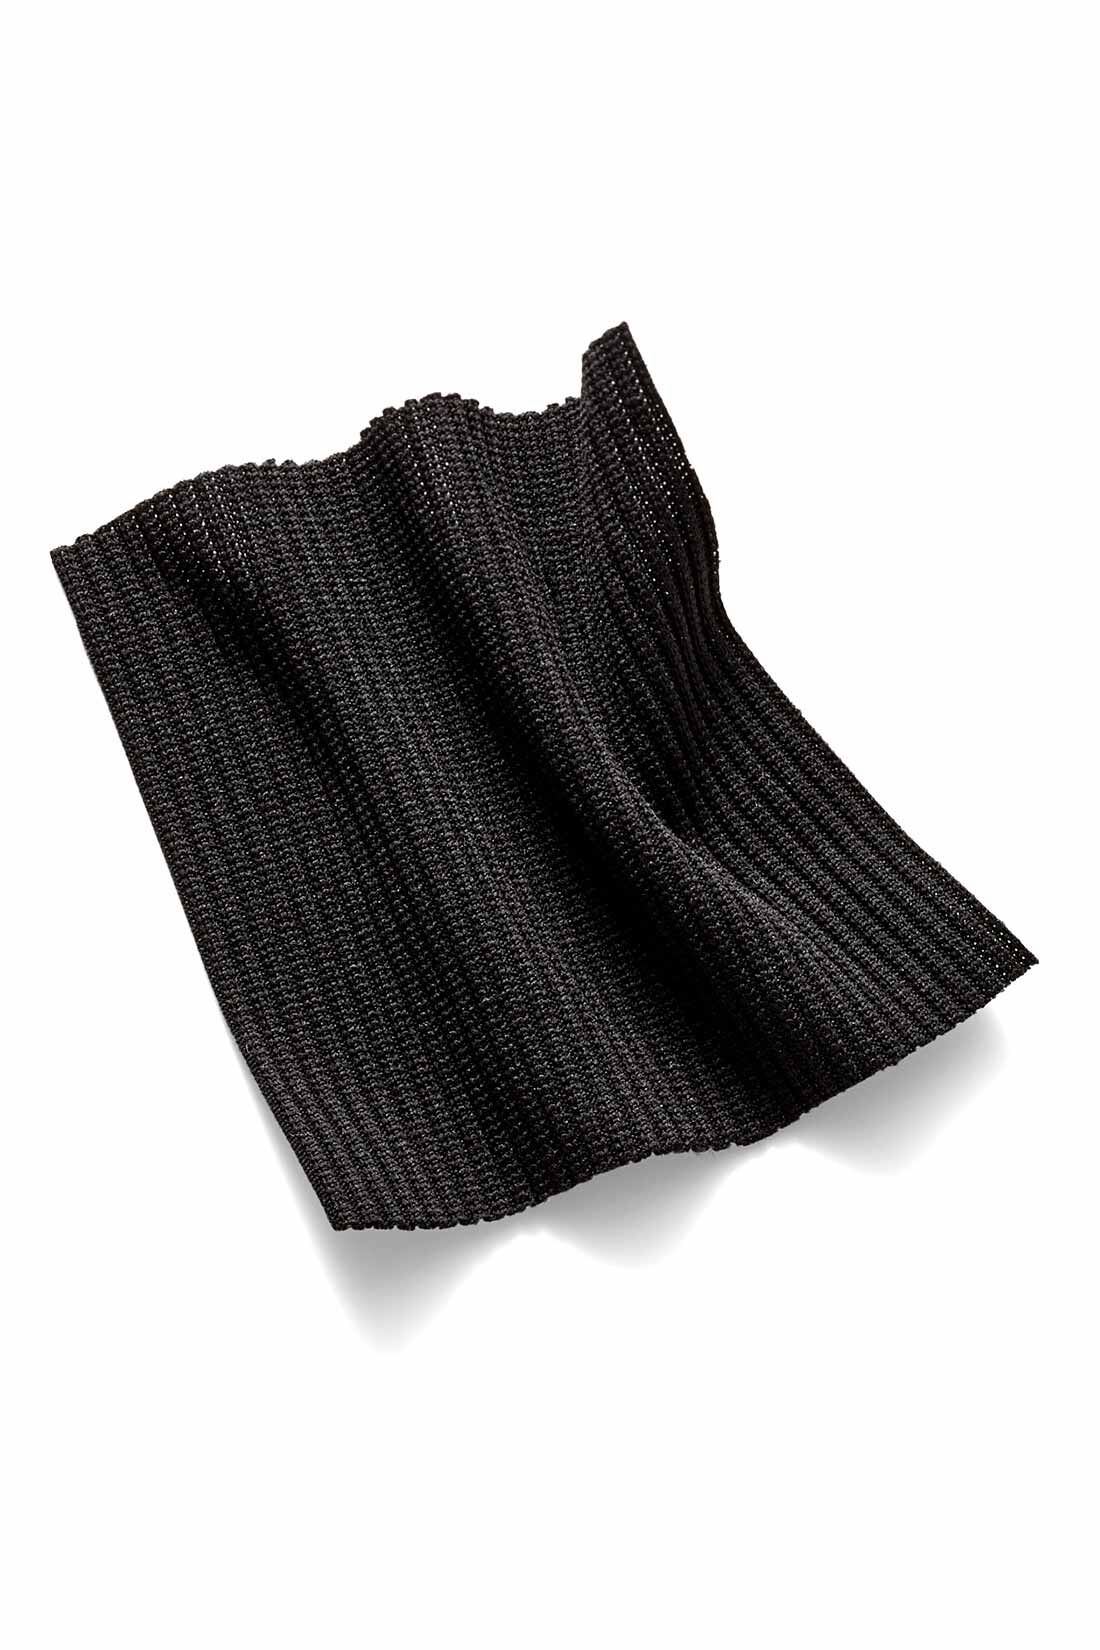 IEDIT|IEDIT[イディット]　福田麻琴さんコラボ リブ素材のラッシュガードカーディガン〈ブラック〉|肌に張り付きにくく着心地も快適なストレッチのきいた細めリブ素材。洋服のように着られる上品なブラック。